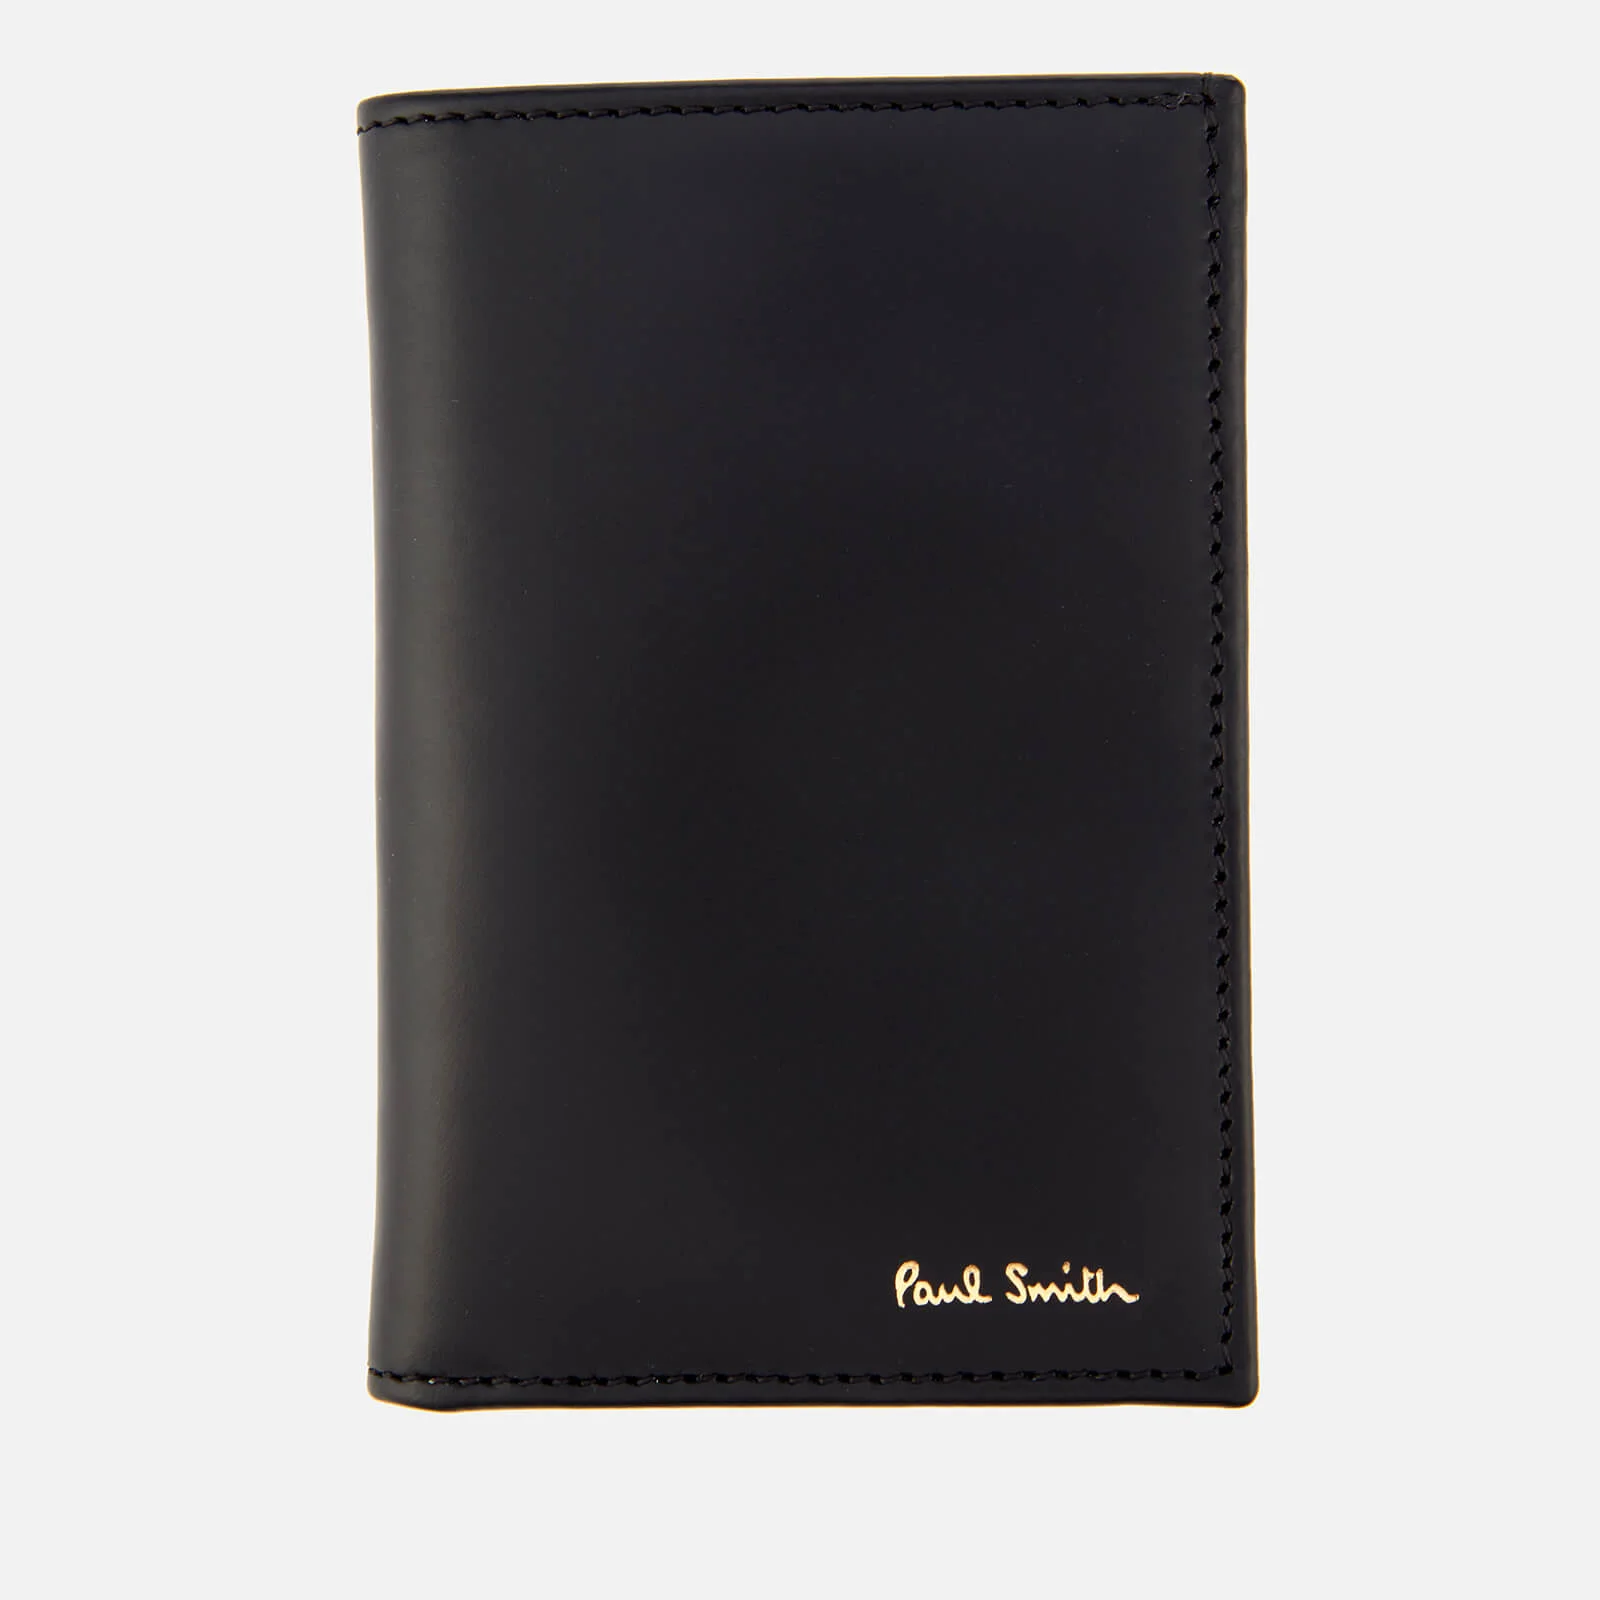 Paul Smith Men's Stripe Credit Card Case - Black Image 1